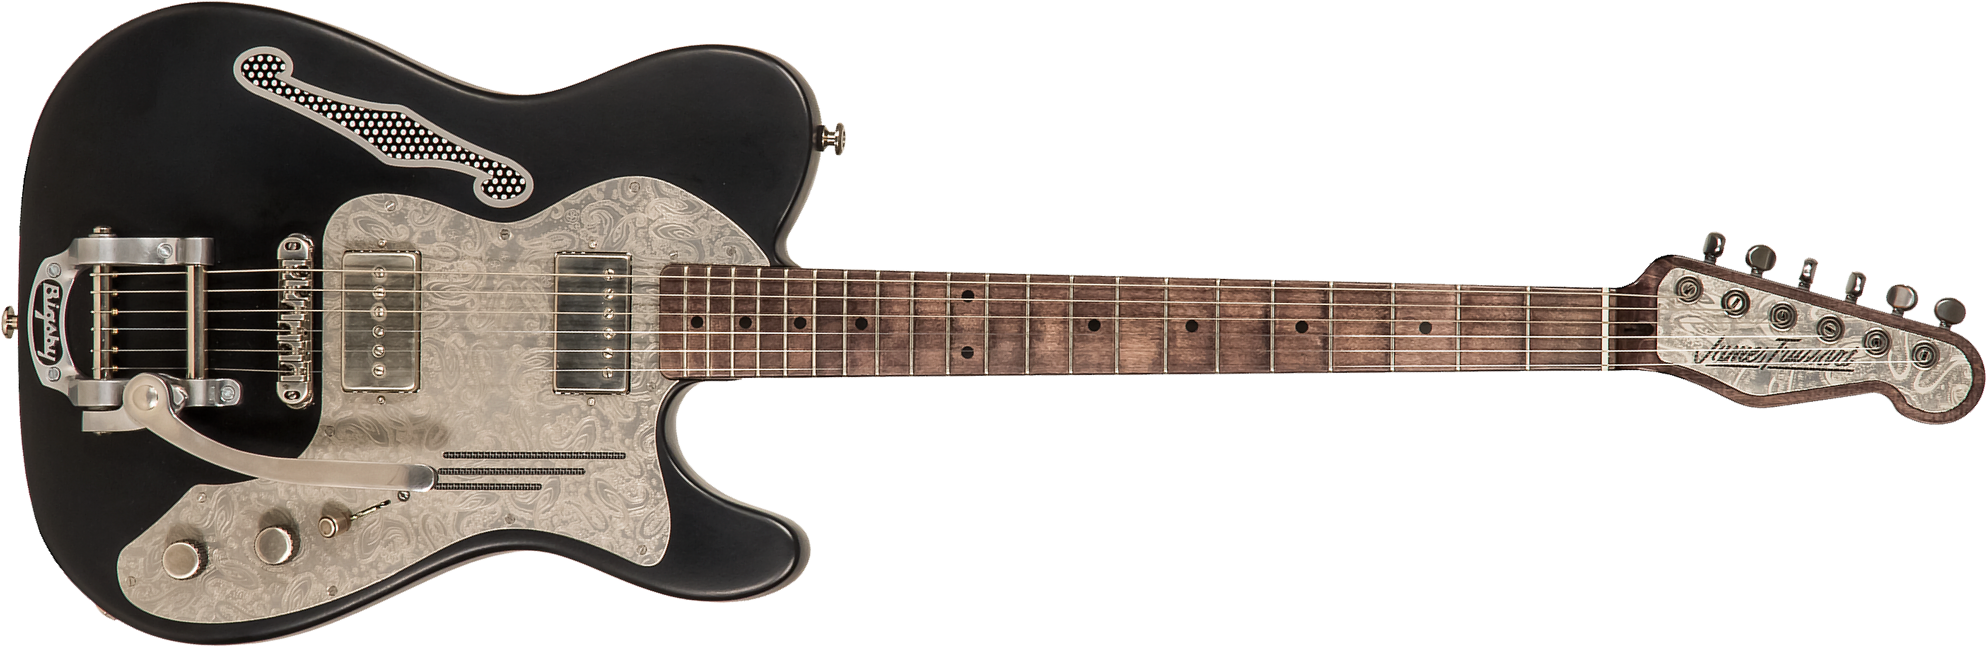 James Trussart Deluxe Steelcaster Perf.back P90h Bigsby Mn #21132 - Antique Silver Paisley Engraved Satin Black - Guitarra eléctrica con forma de tel 